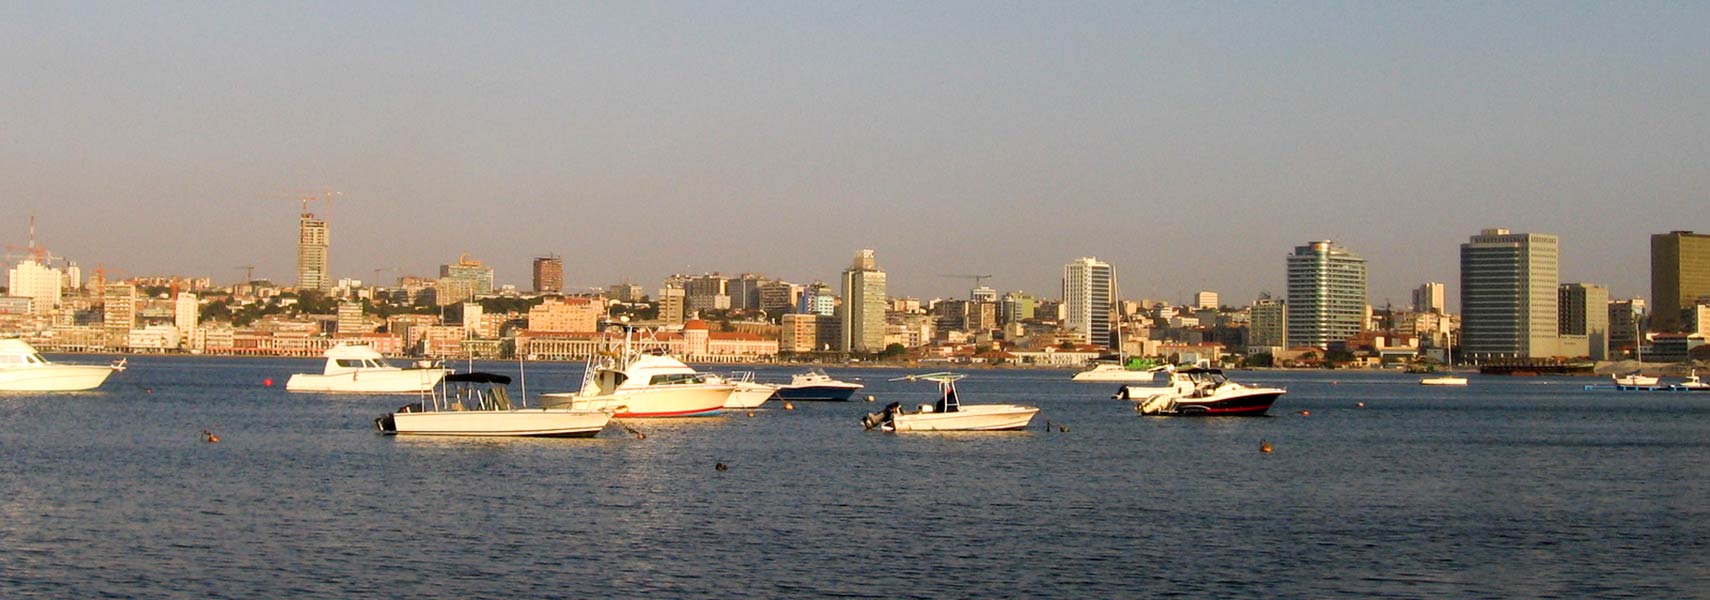 Bay of Luanda, Angola